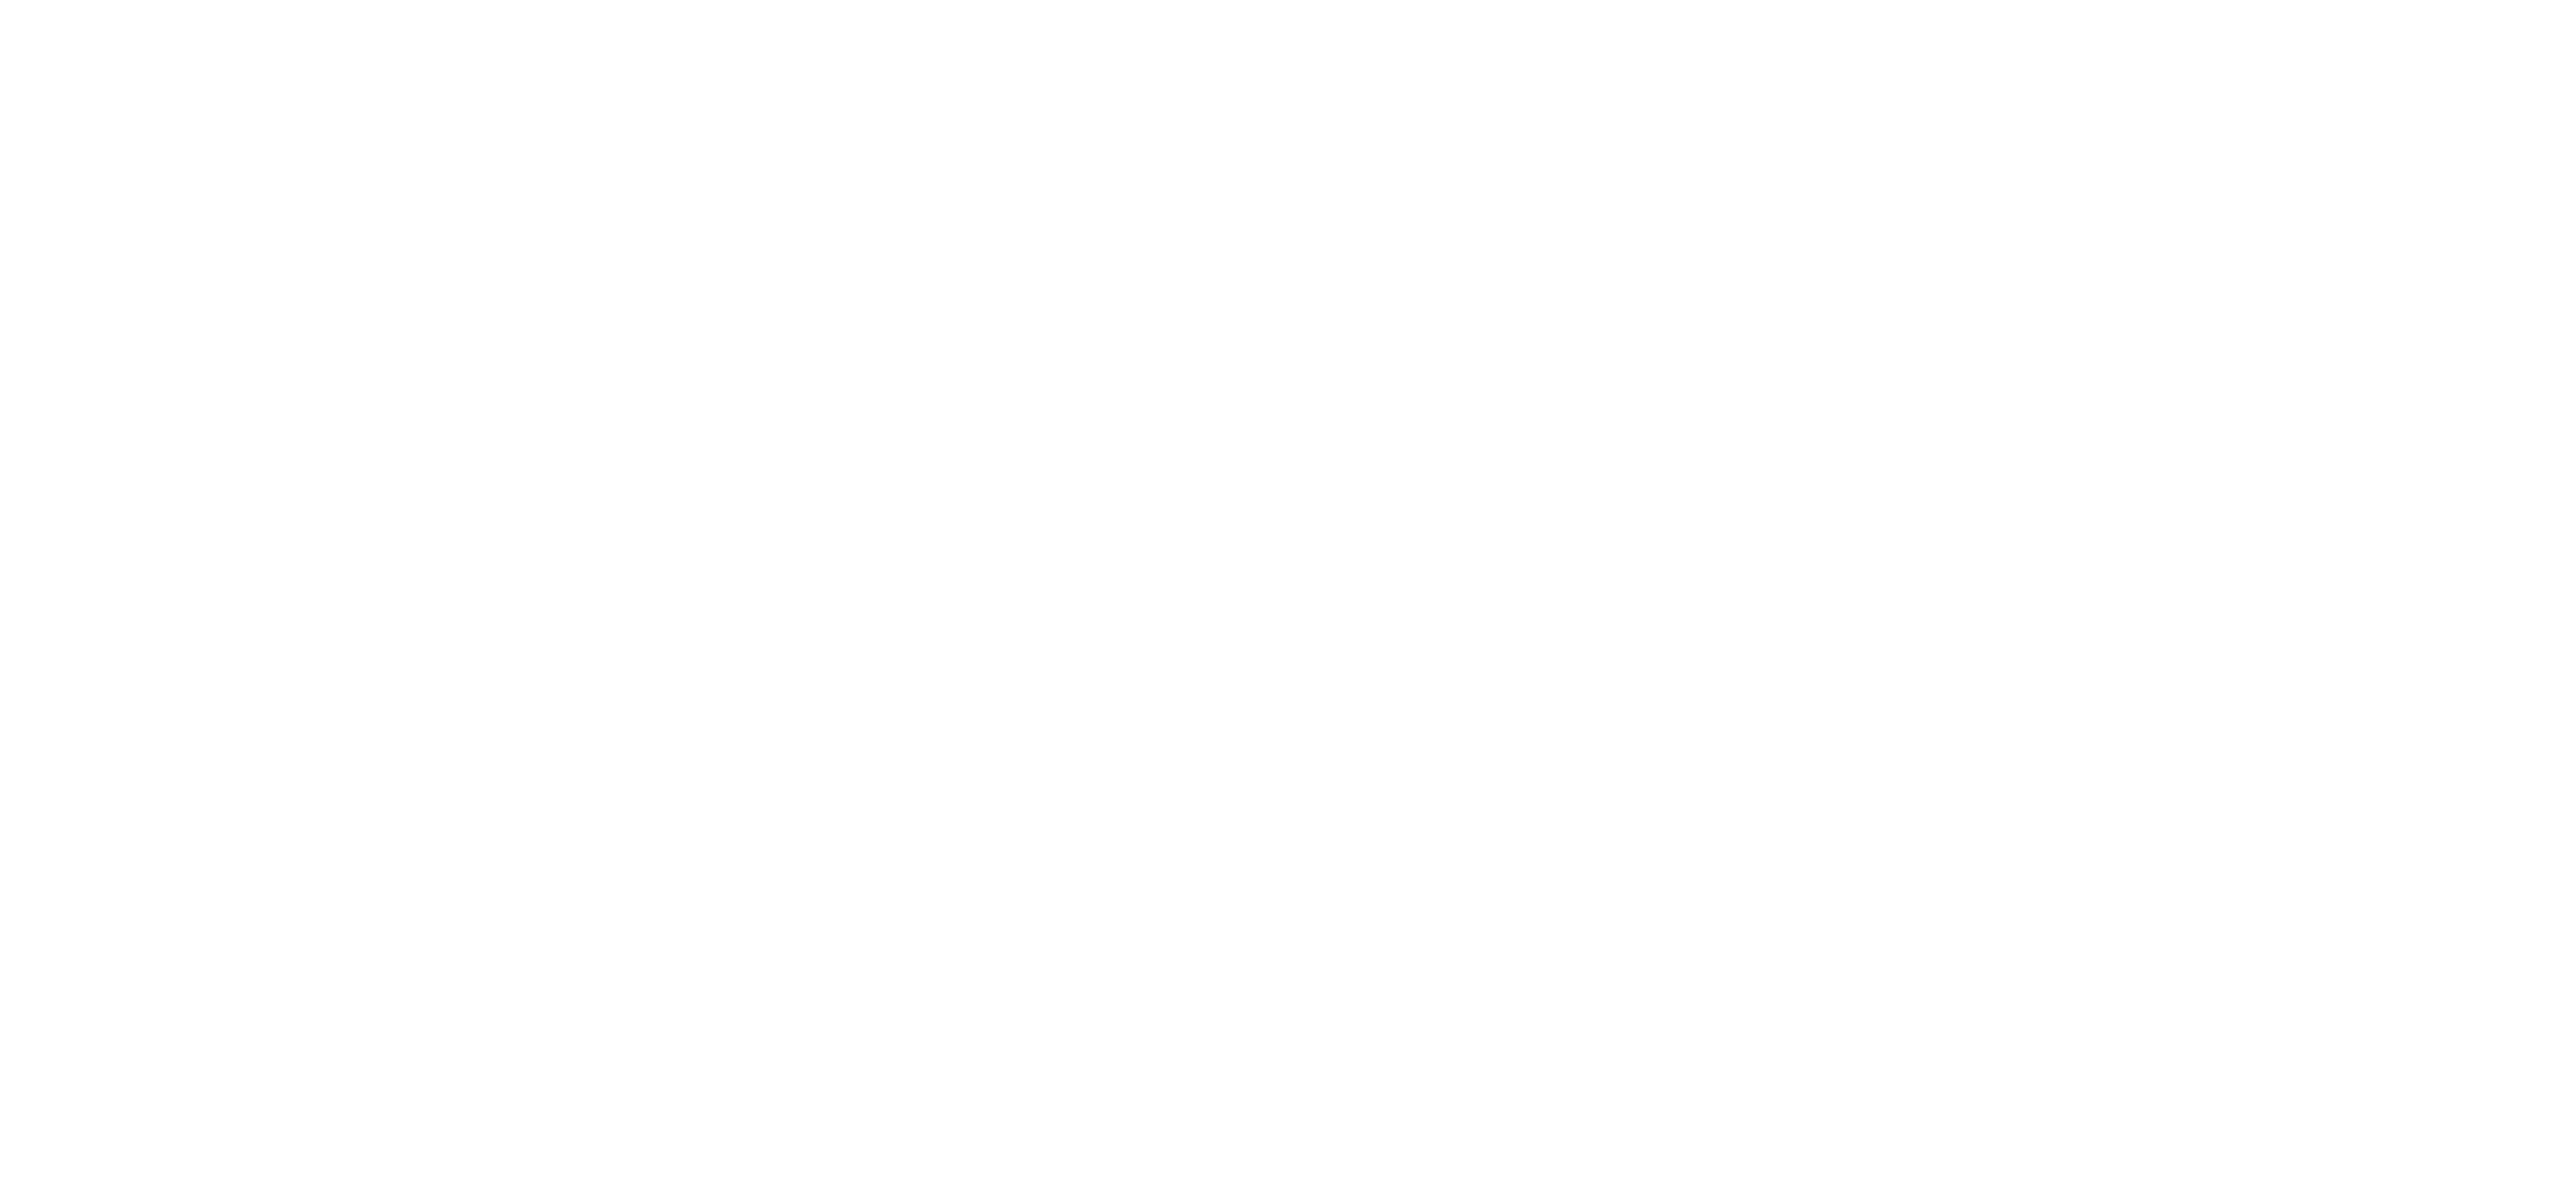 Exotrail